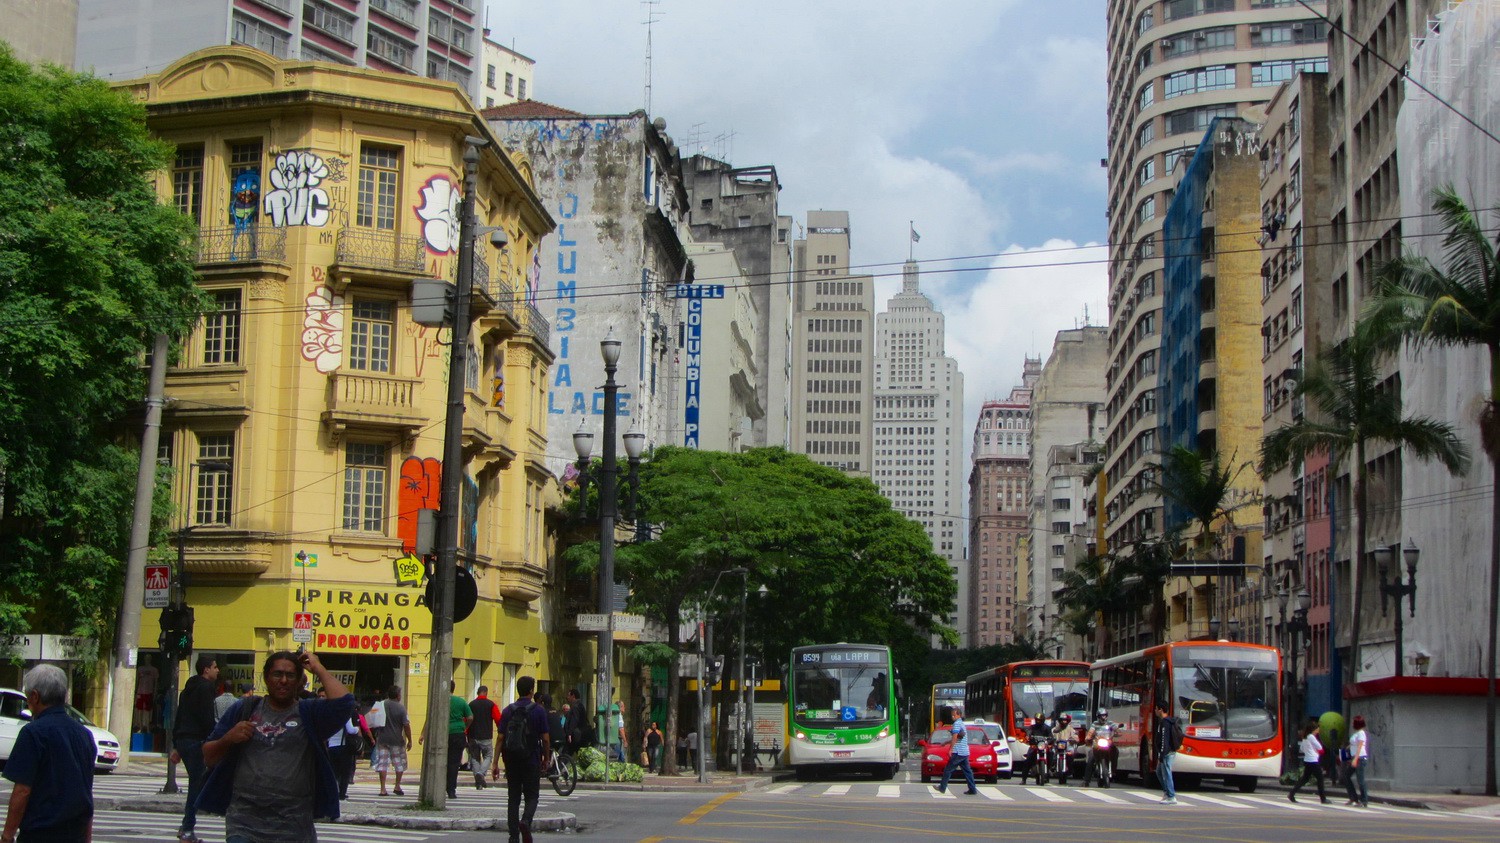 Avenida Sao Joao nearby Praca da Republica